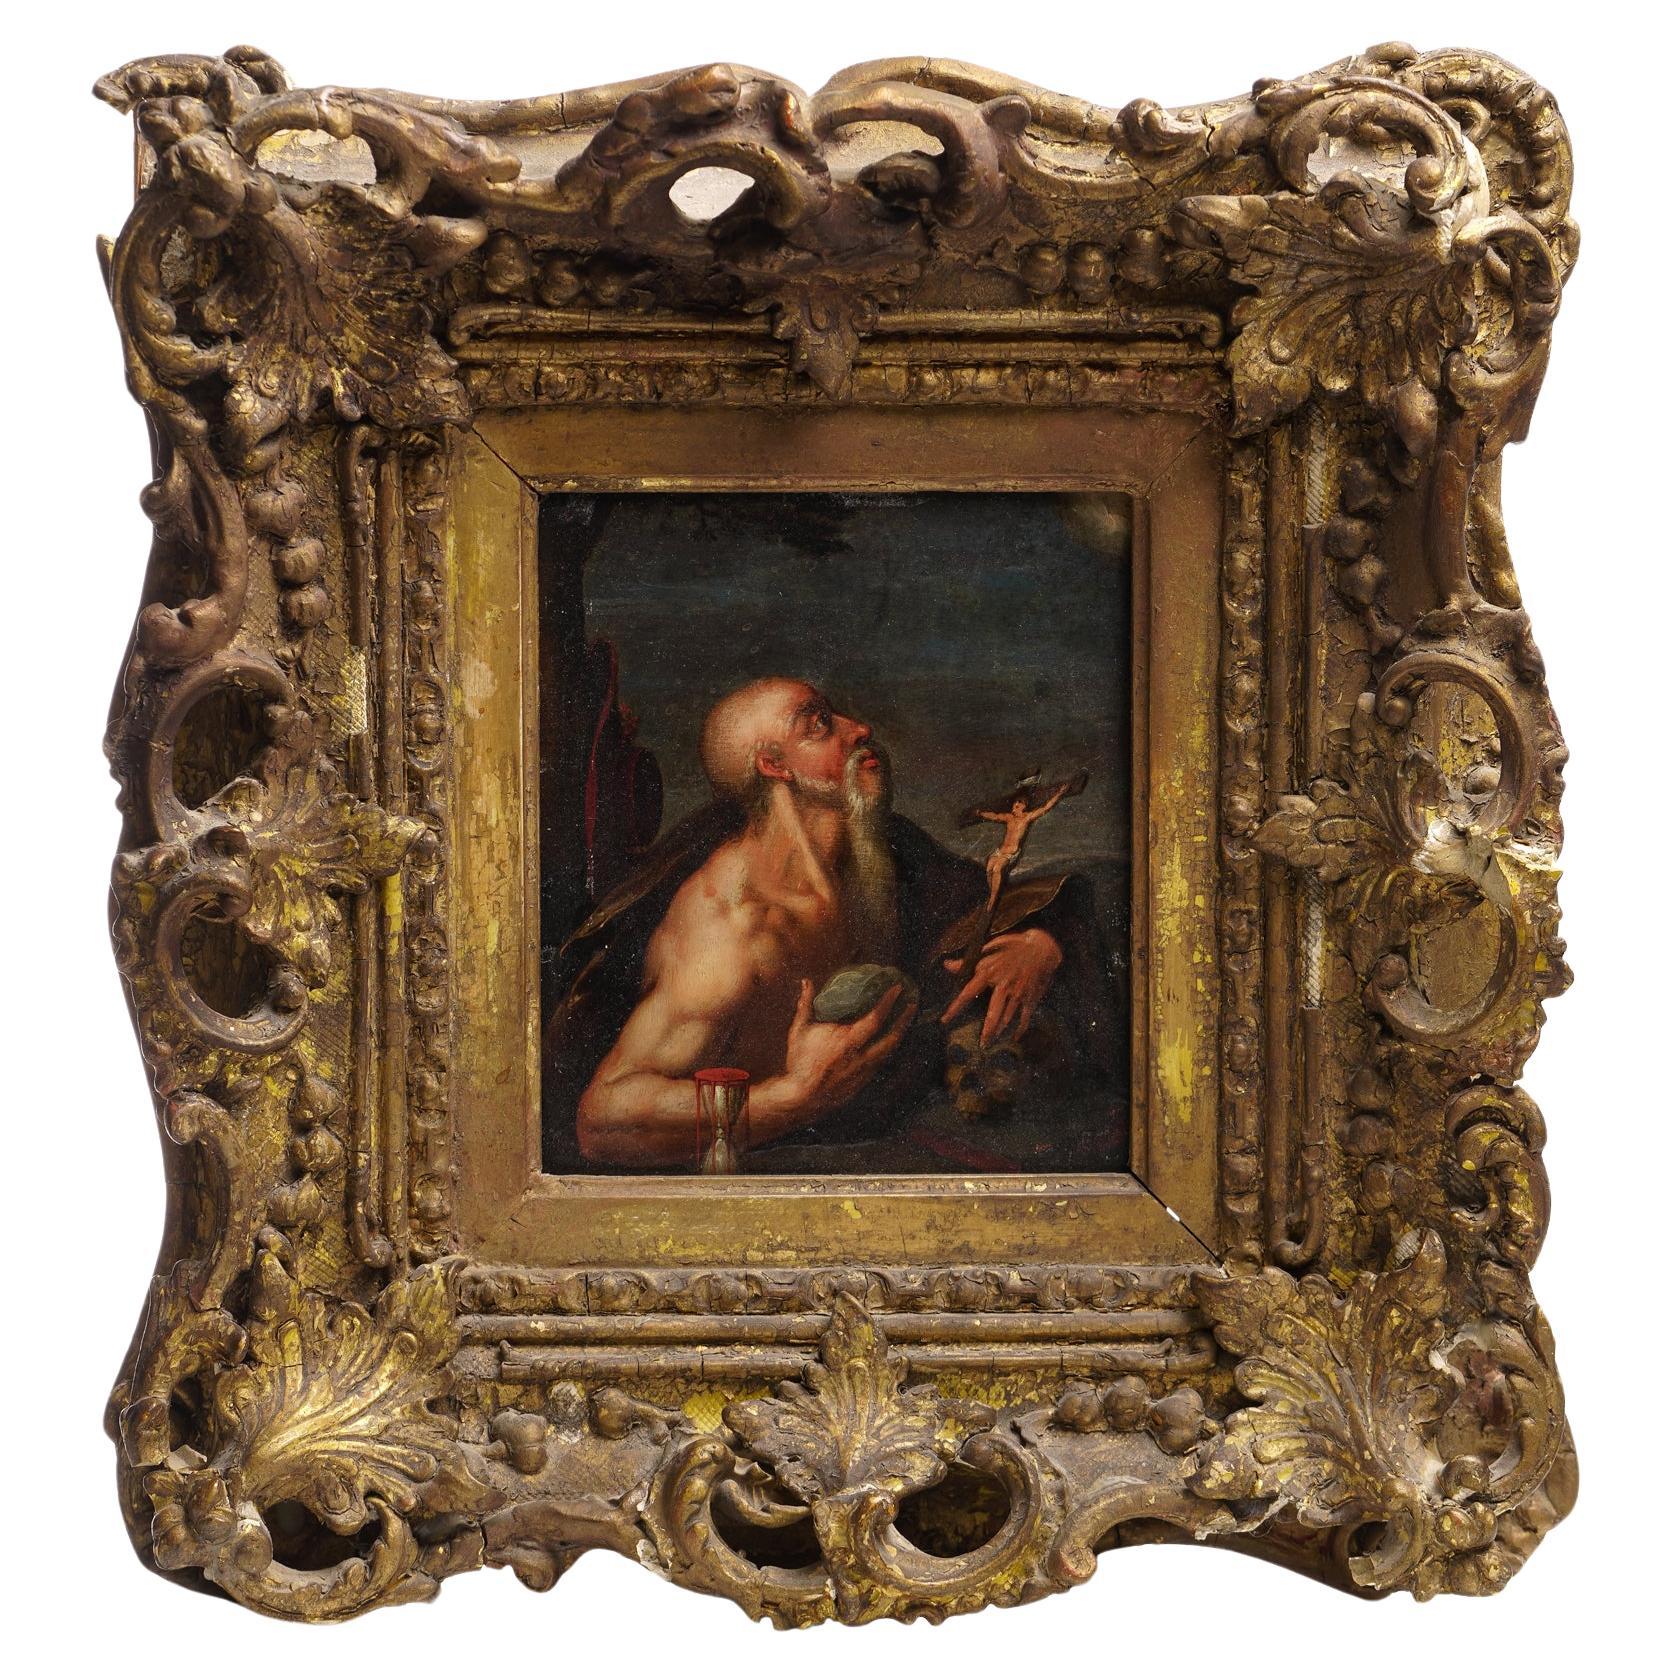 17th century oil on copper portrait - St. Jerome